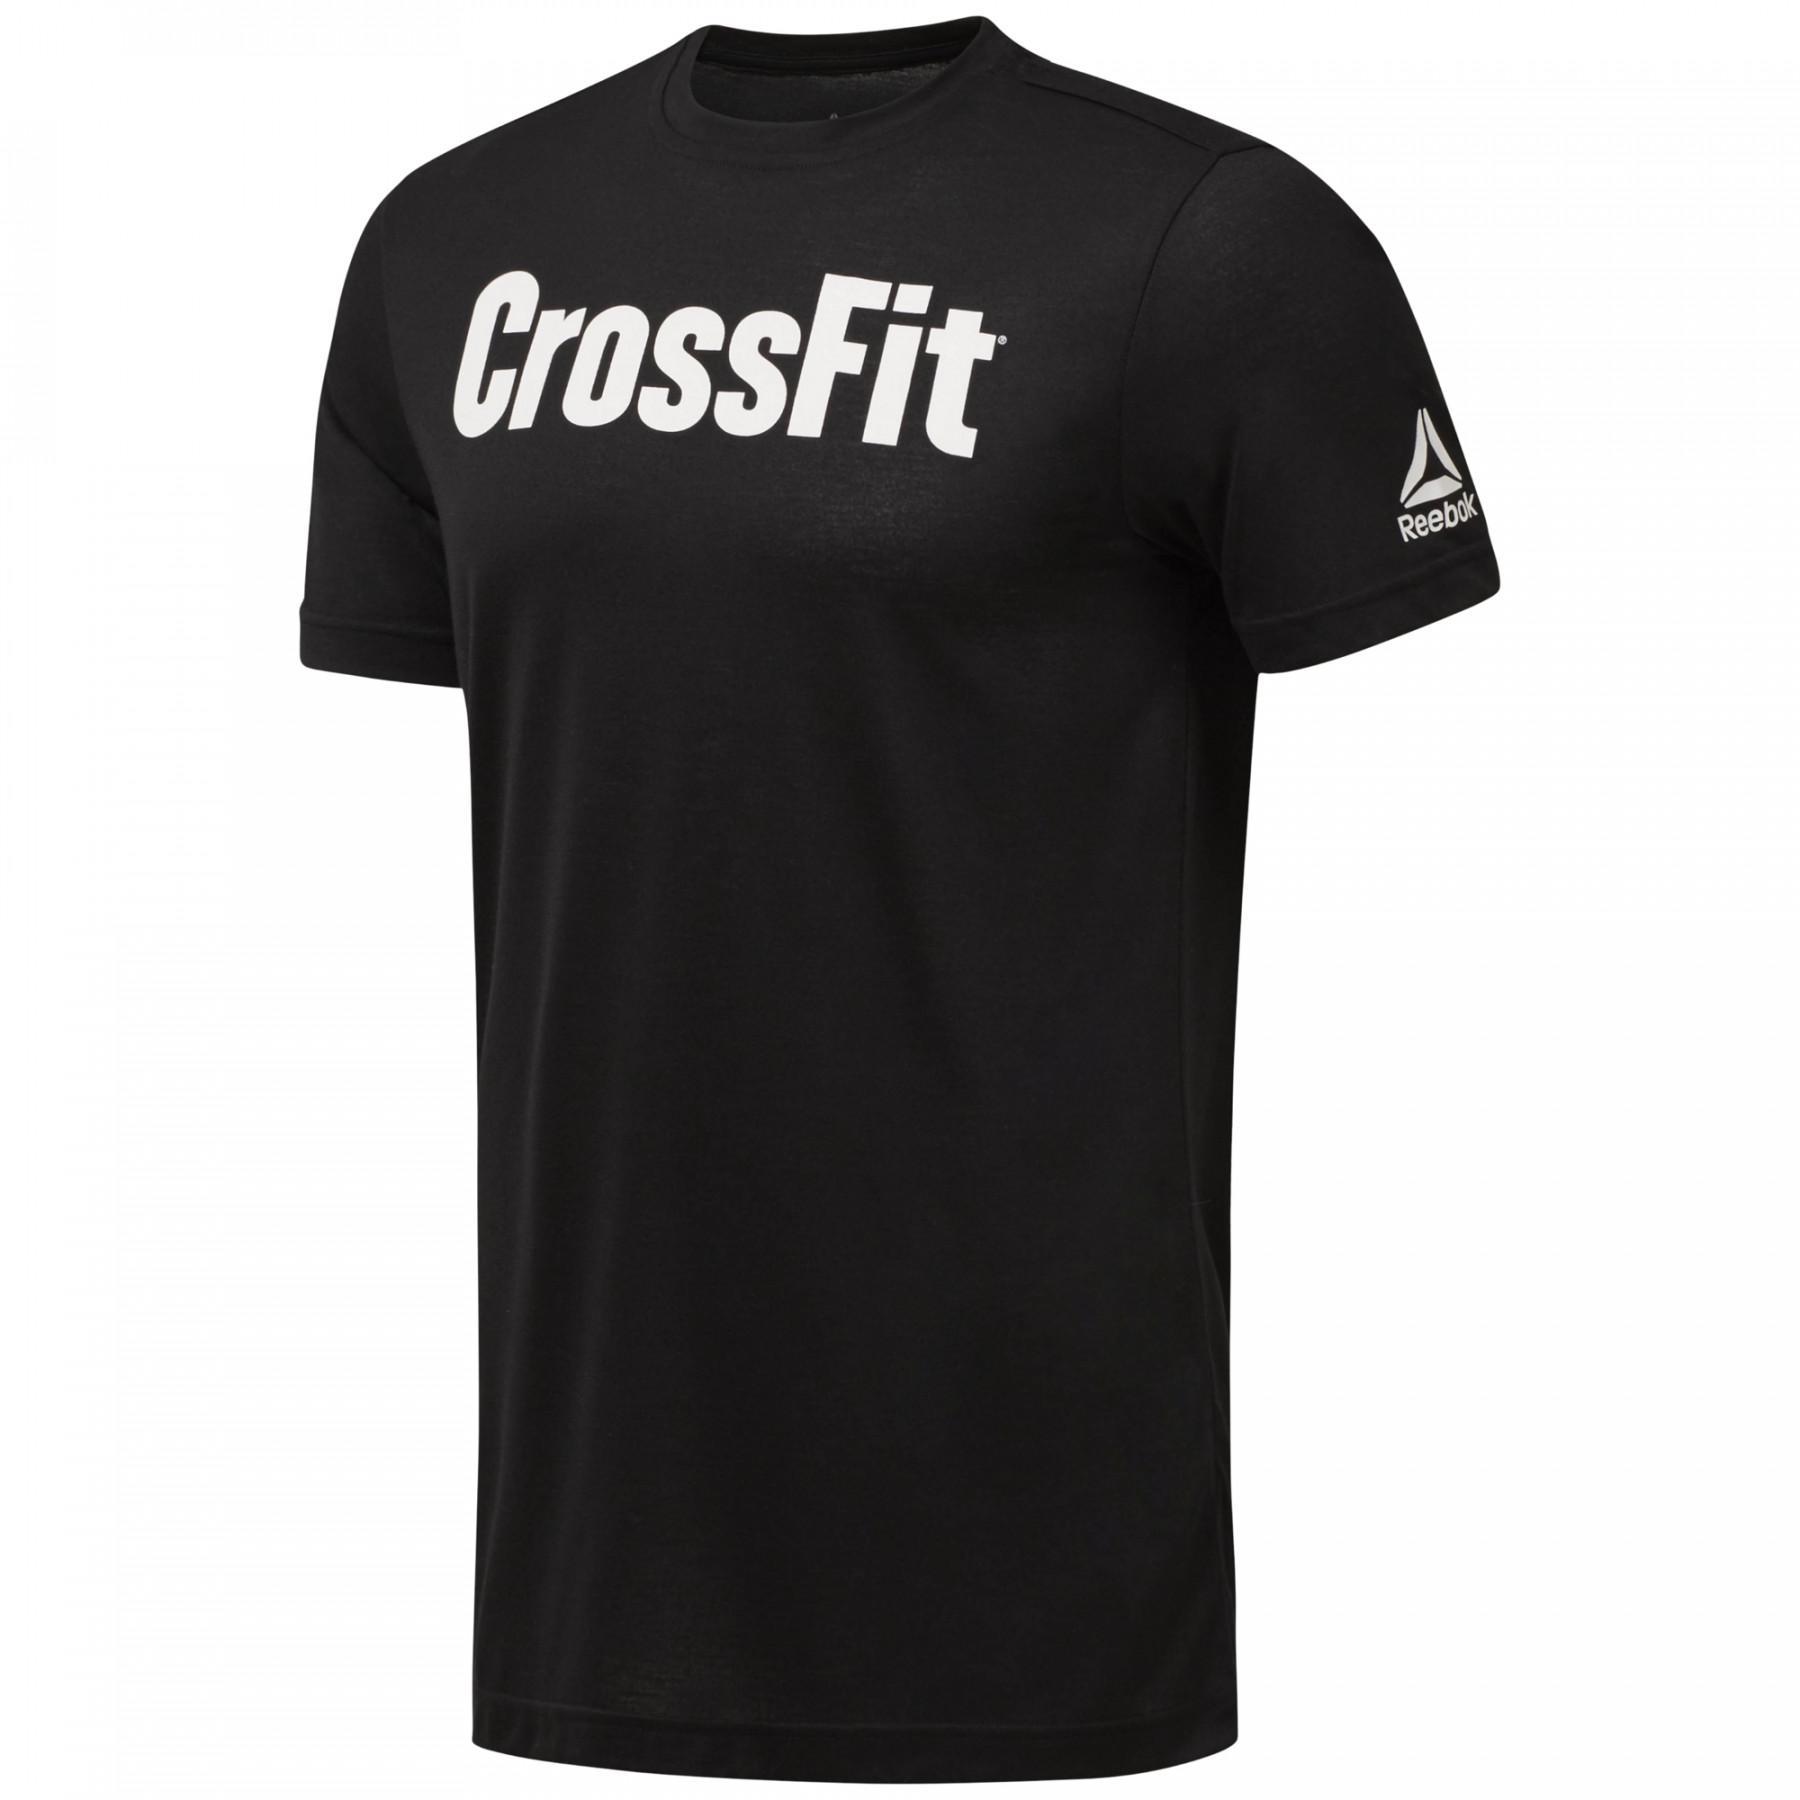 T-shirt Reebok Crossfit Forging Elite Fitness